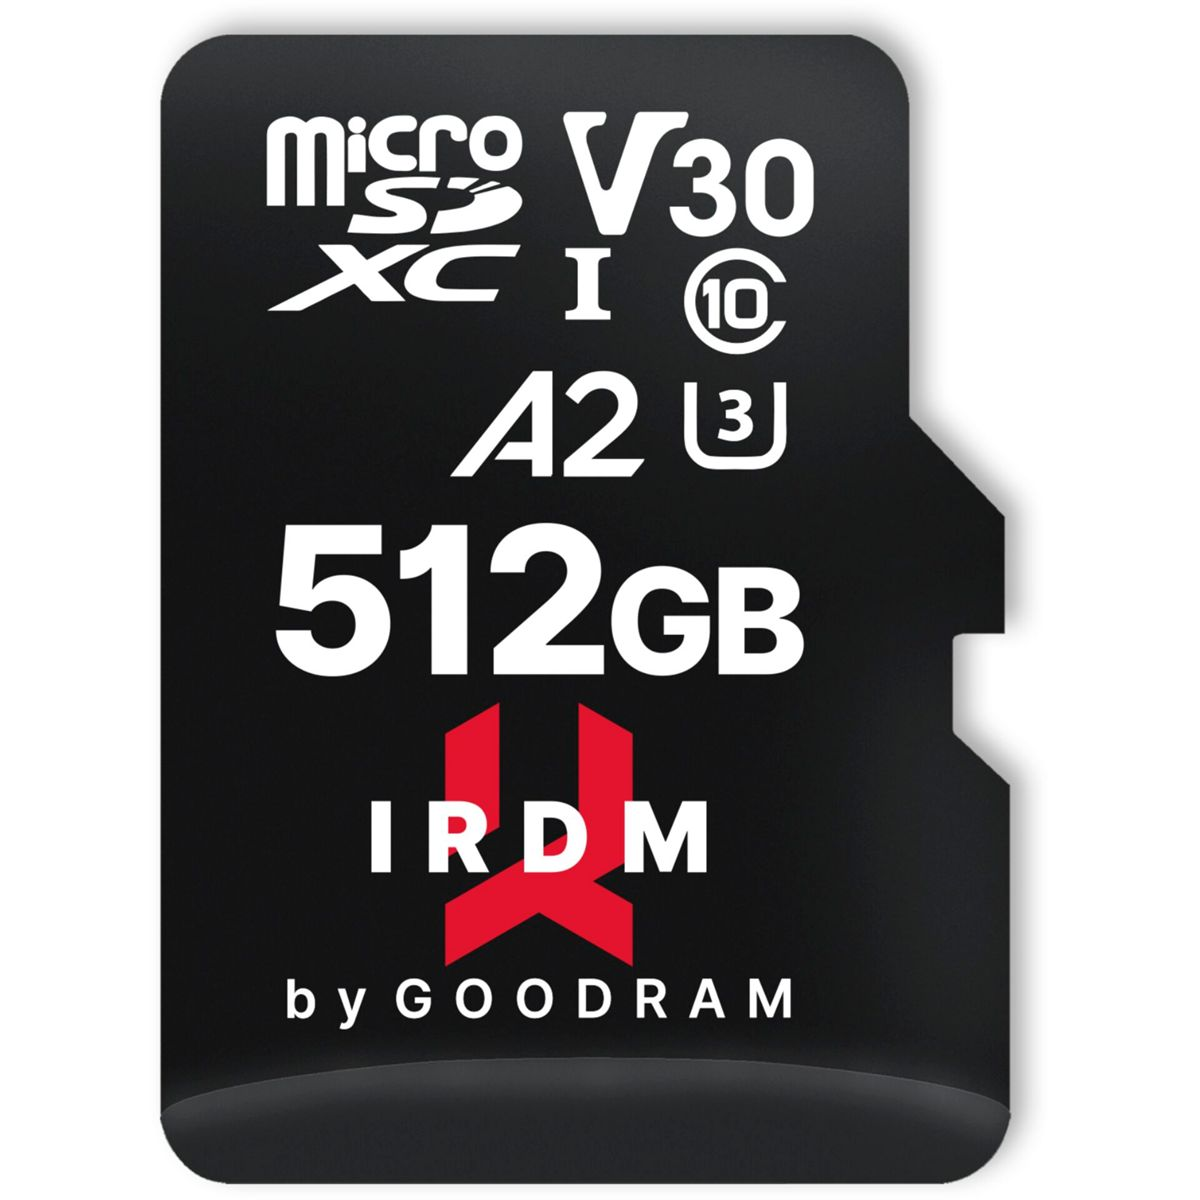 GOODRAM IRDM microSDXC 512GB V30 UHS-I 512 adapter, Micro-SDXC + GB U3 Speicherkarte